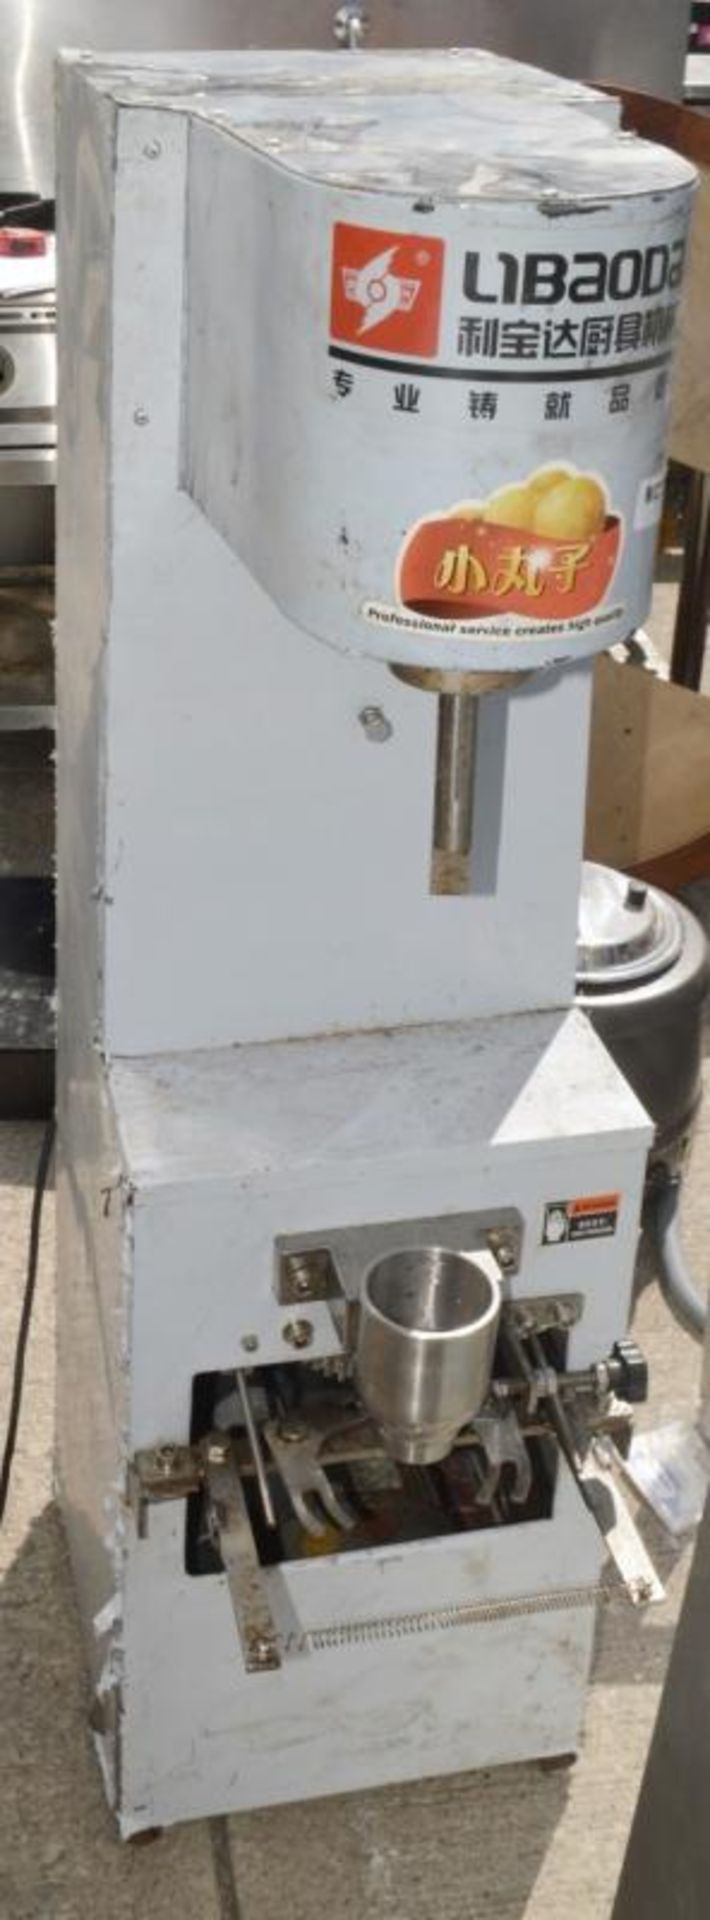 1 x Industrial Meatball Machine (Model: SXW-280) - Dimensions: H123 x W27 x D57cmPre-owned, Taken Fr